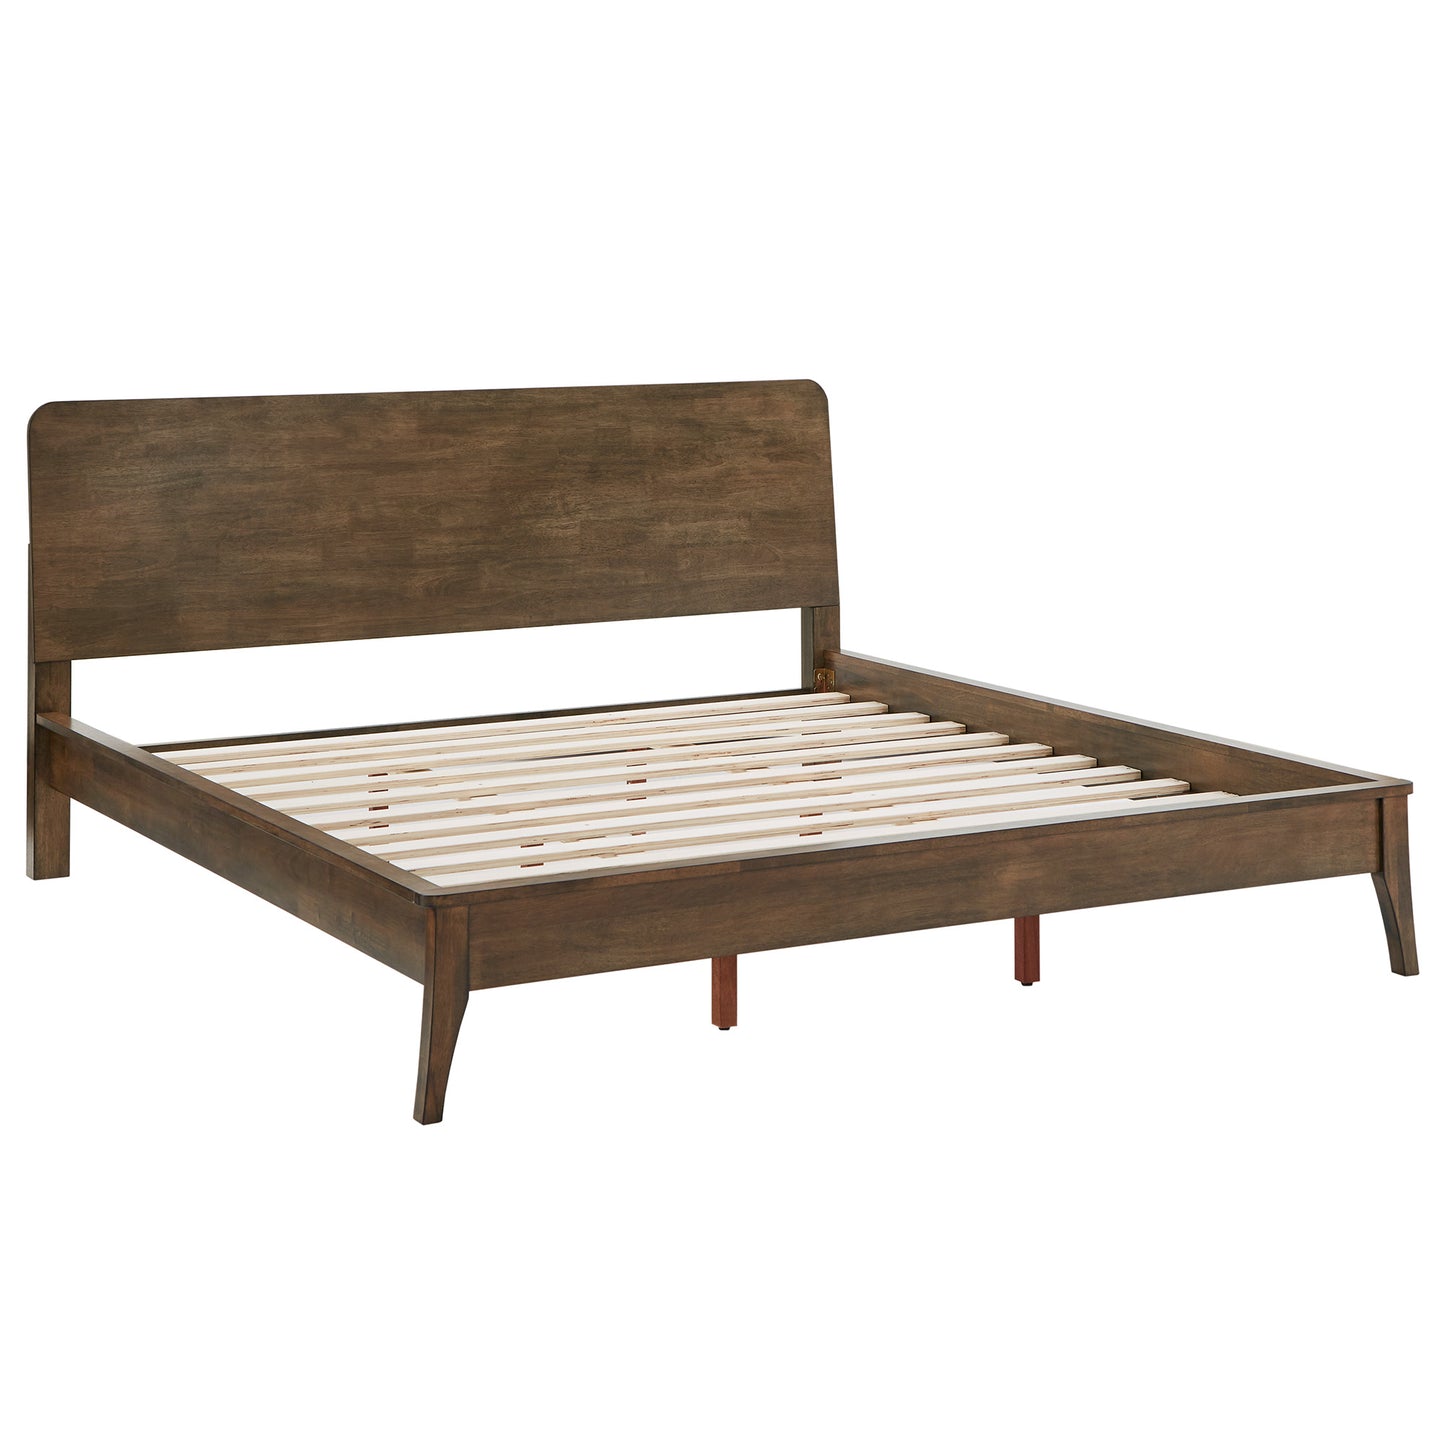 Wood Platform Bed - Walnut Finish, King Size